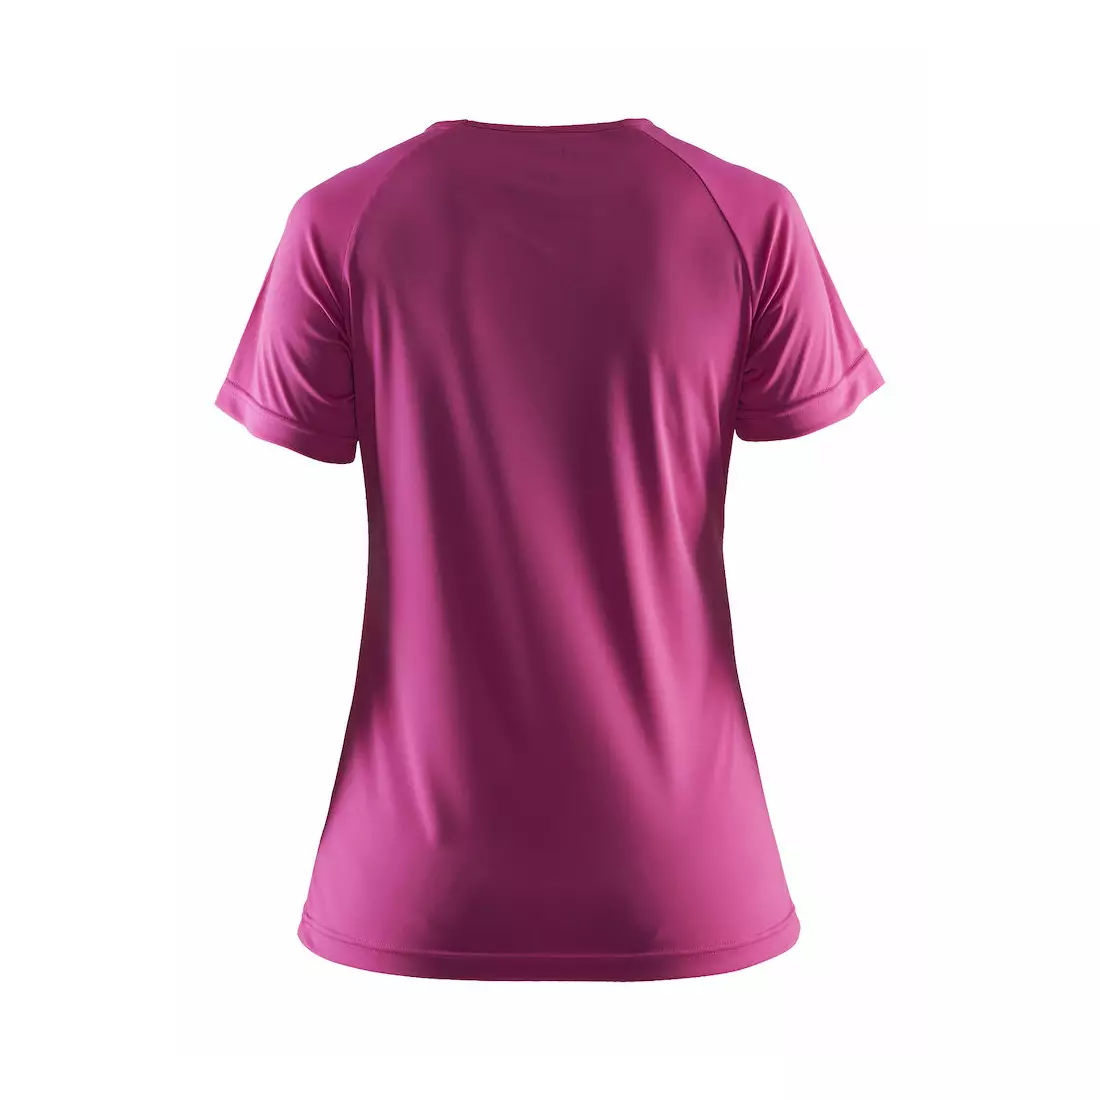 CRAFT PRIME women's sports T-shirt 1903176-1403